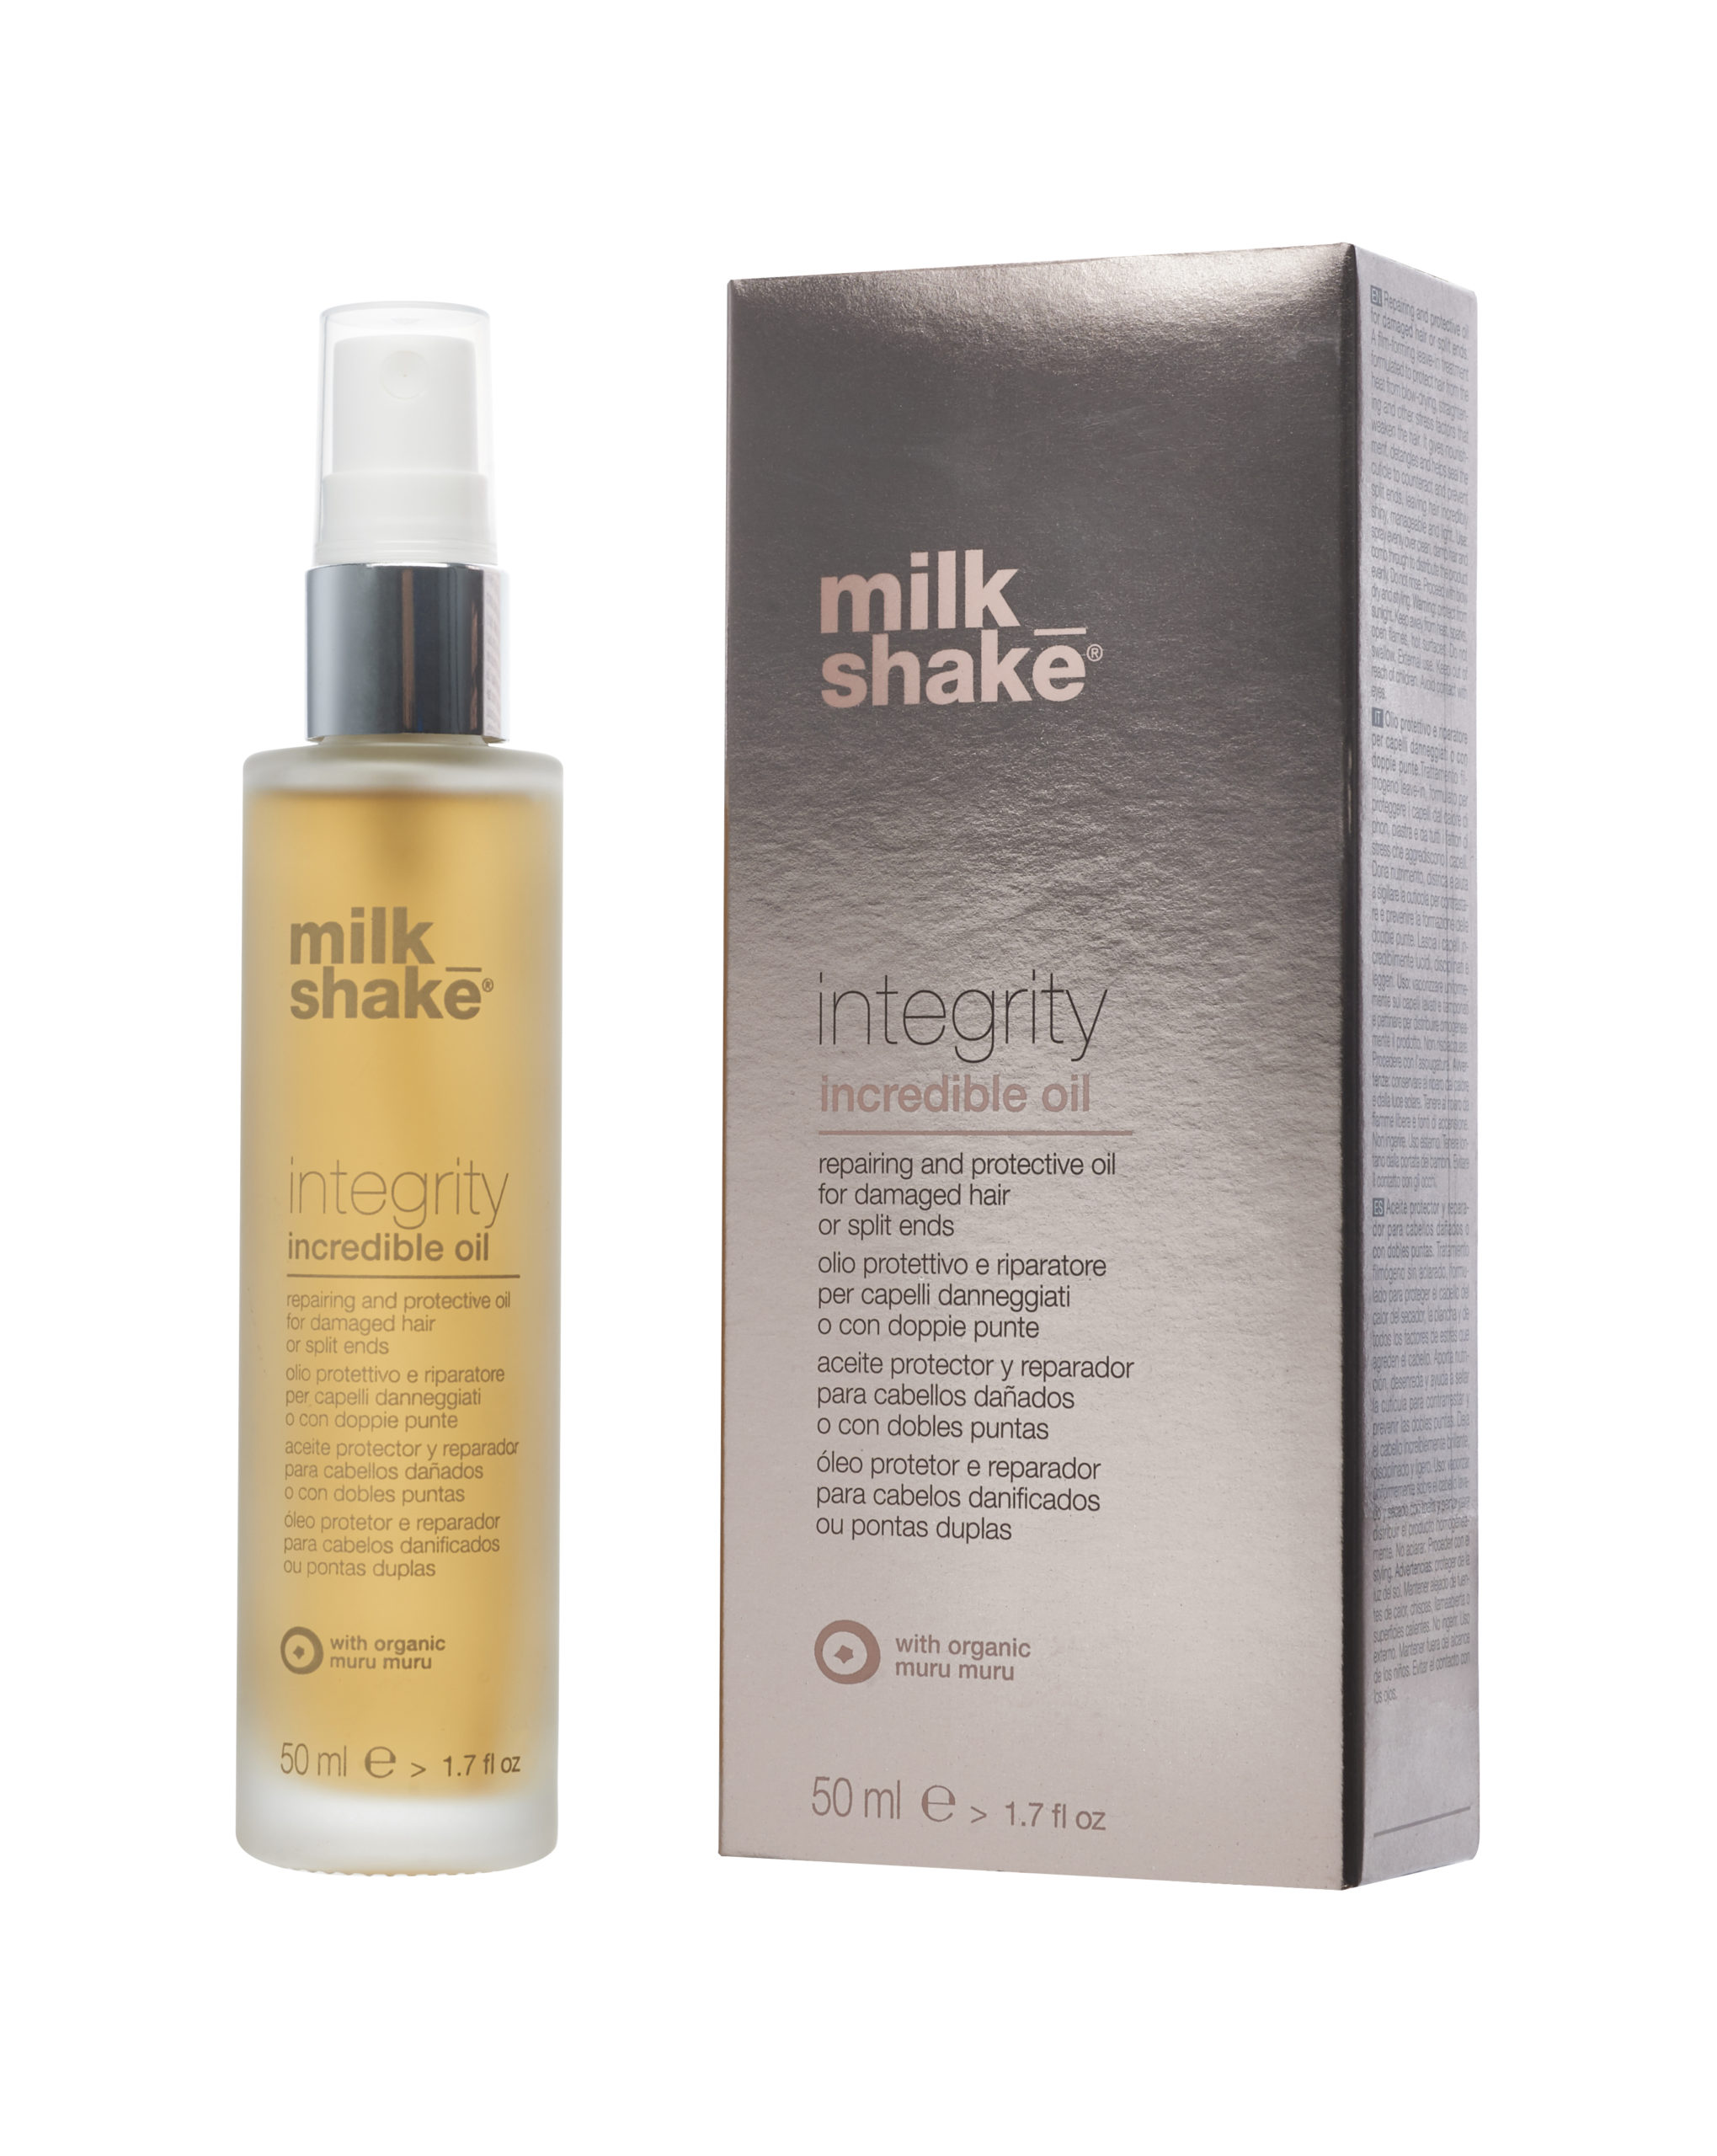 MilkShake Integrity incredible oil 50ml